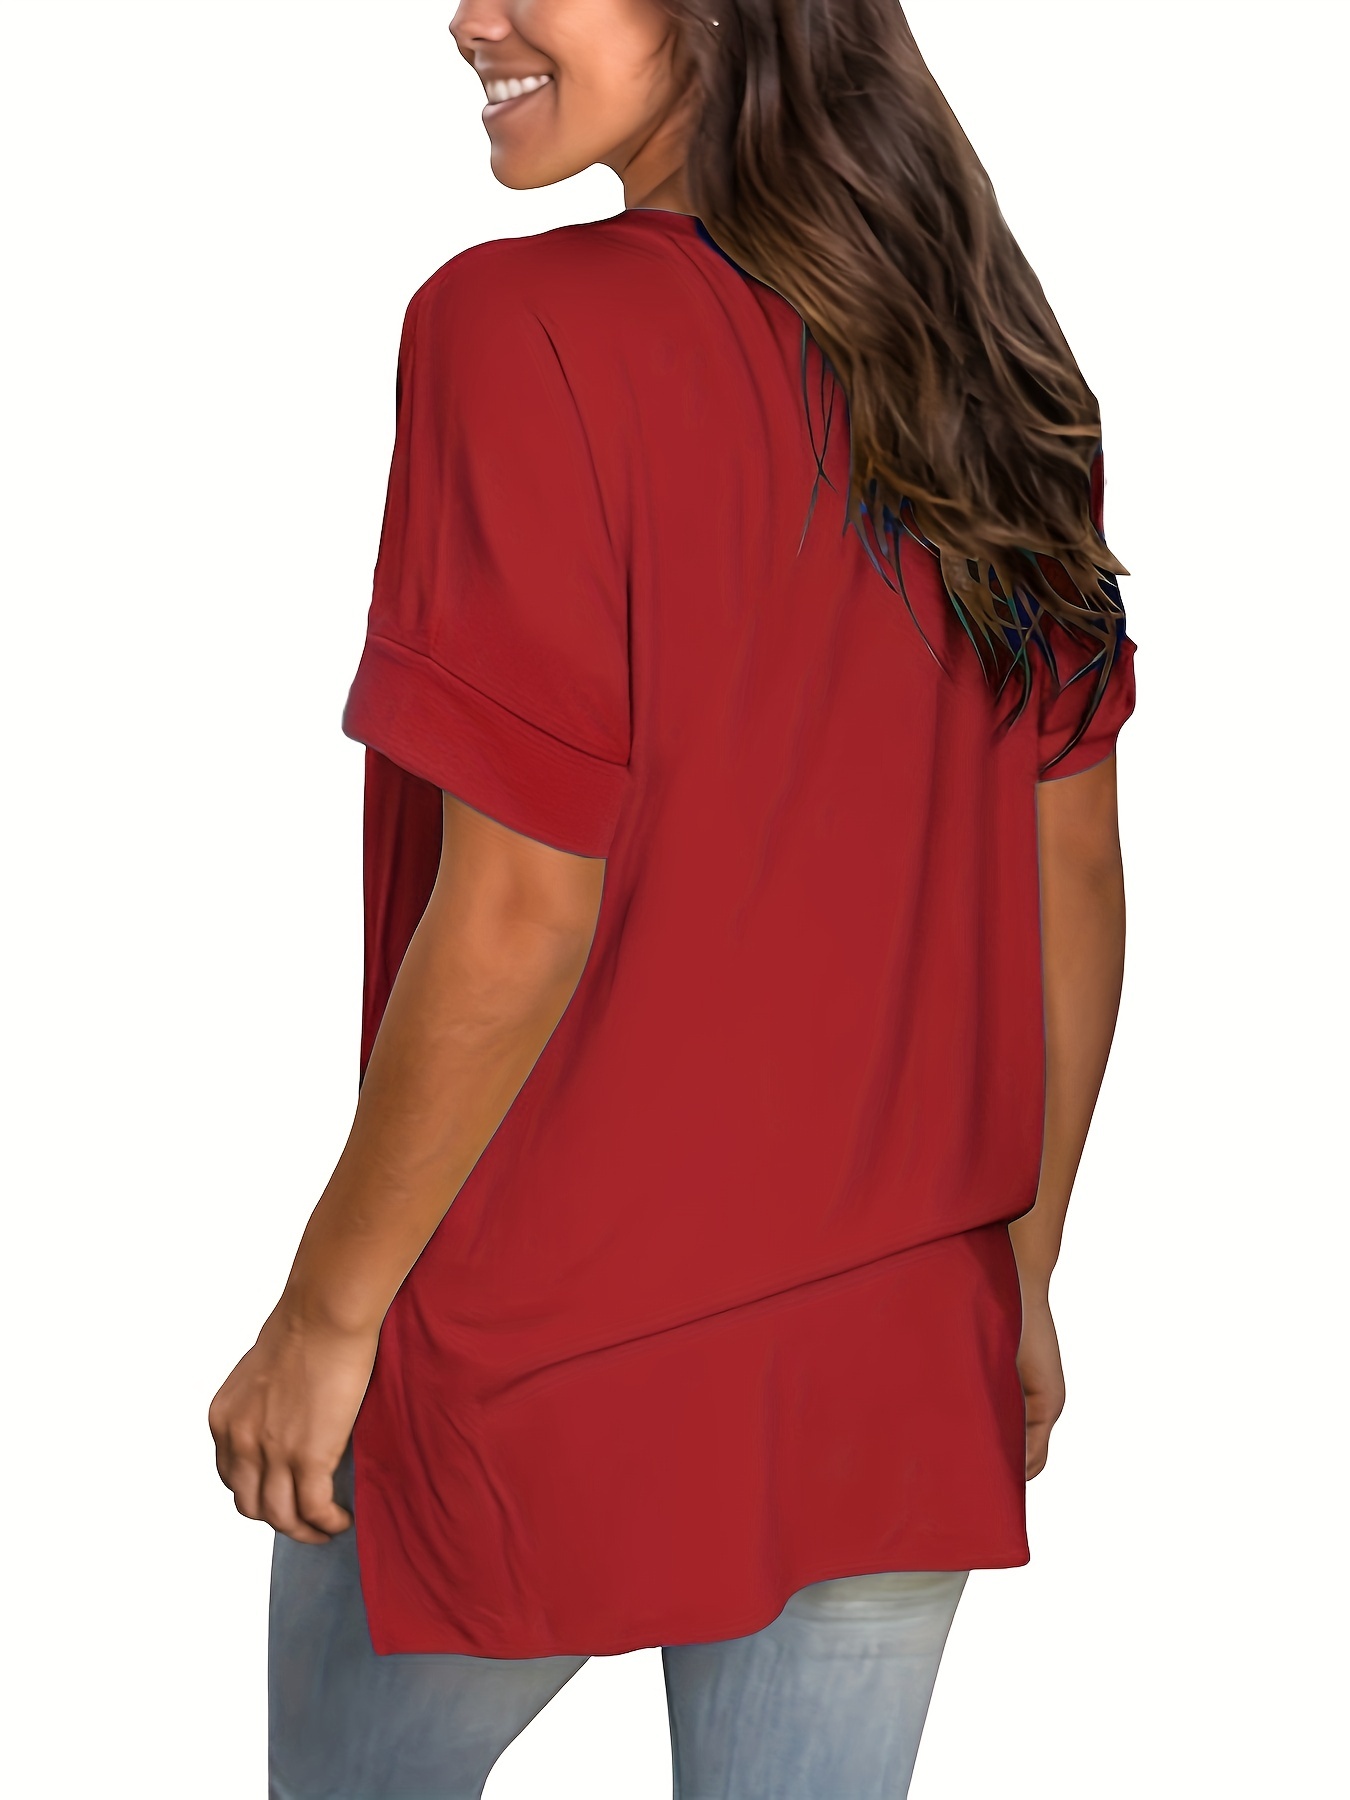 Lolmot Women Fashion Printed Casual V-Neck Short Sleeve Loose T-Shirt  Blouse Tops